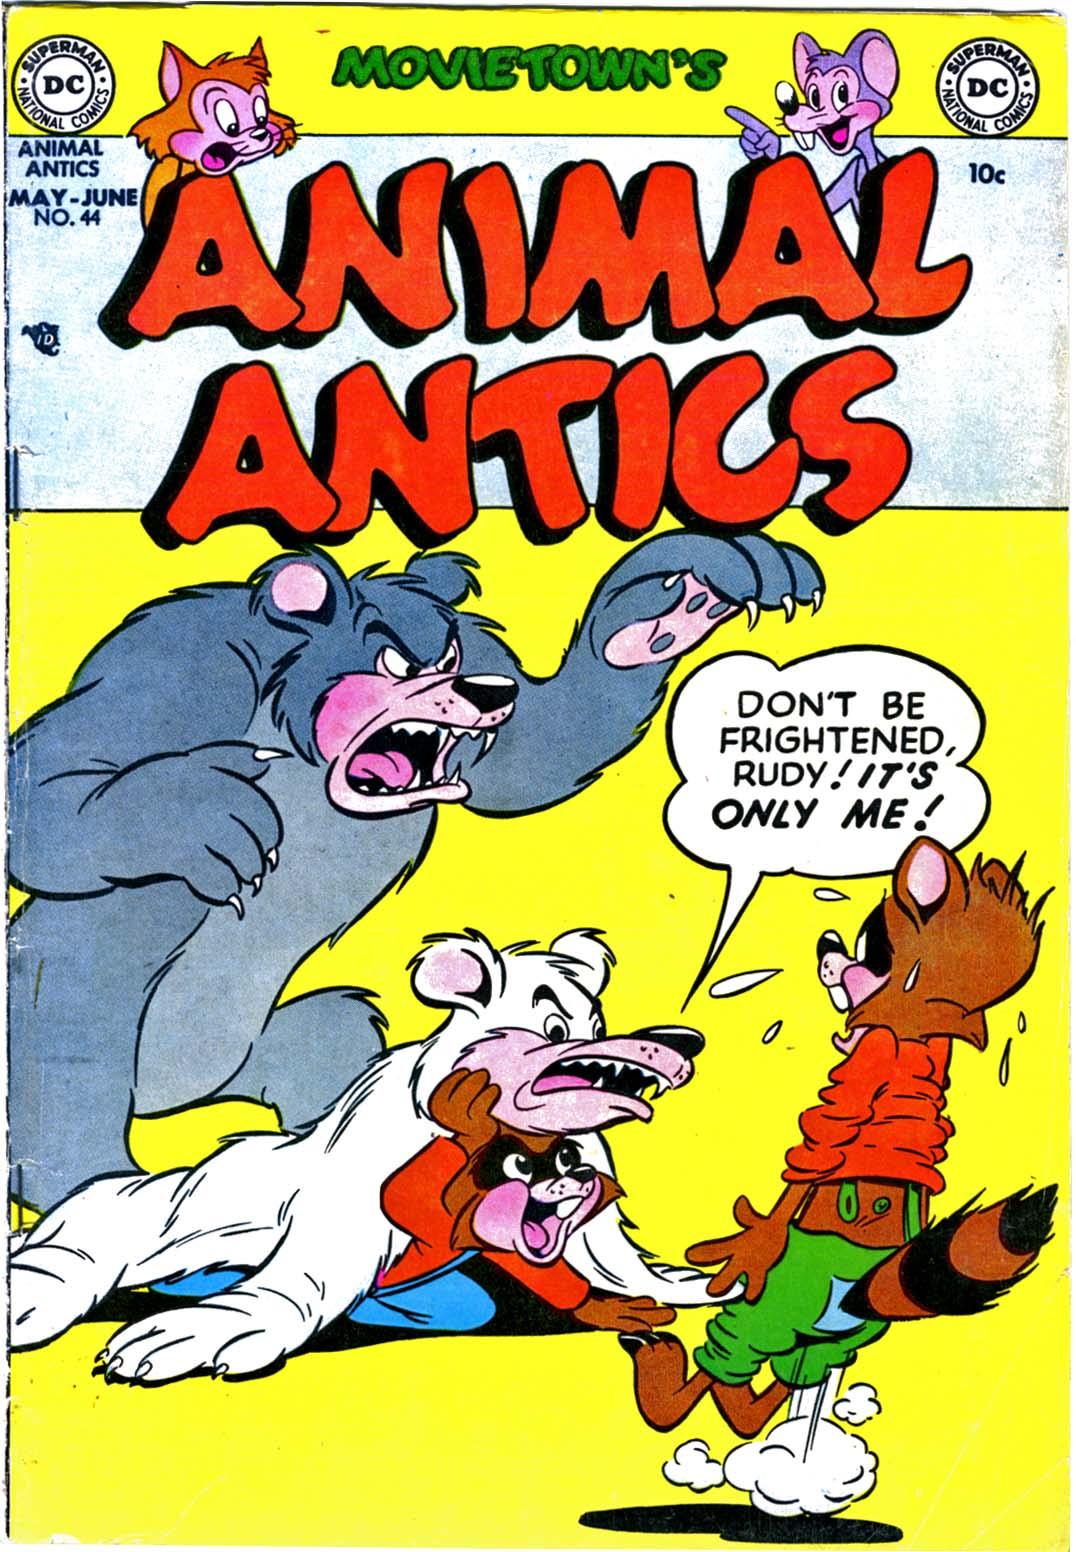 Movietown's Animal Antics Vol. 1 #44